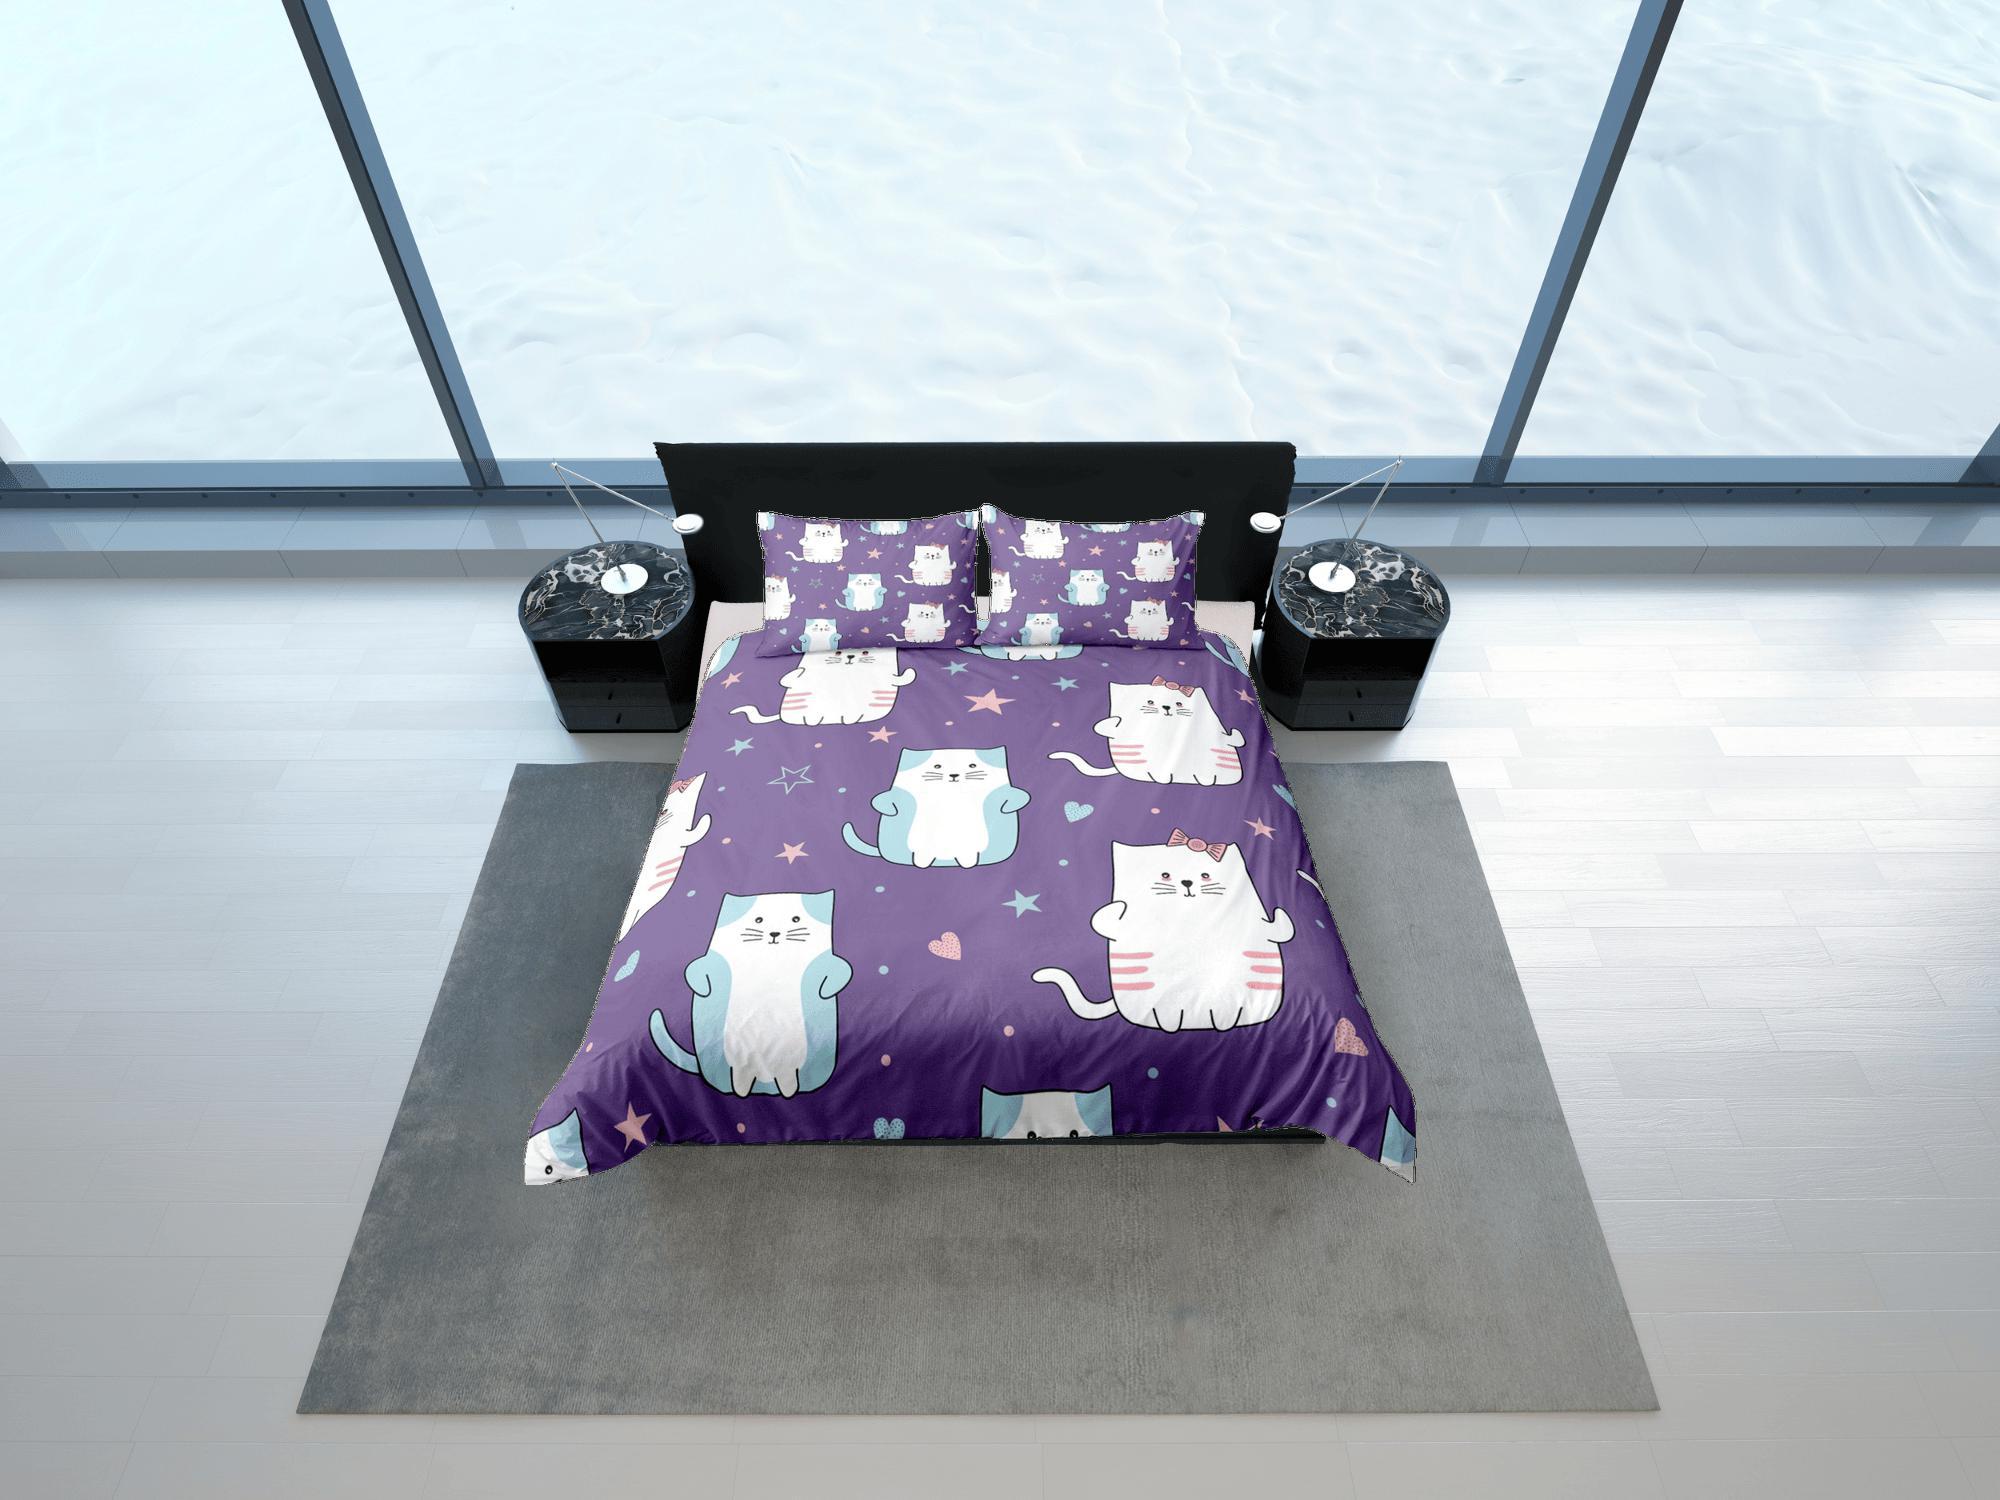 daintyduvet Cat Lover Duvet Cover Bedspread, Cute Cats Purple Bedding for Teens Kids Bedroom